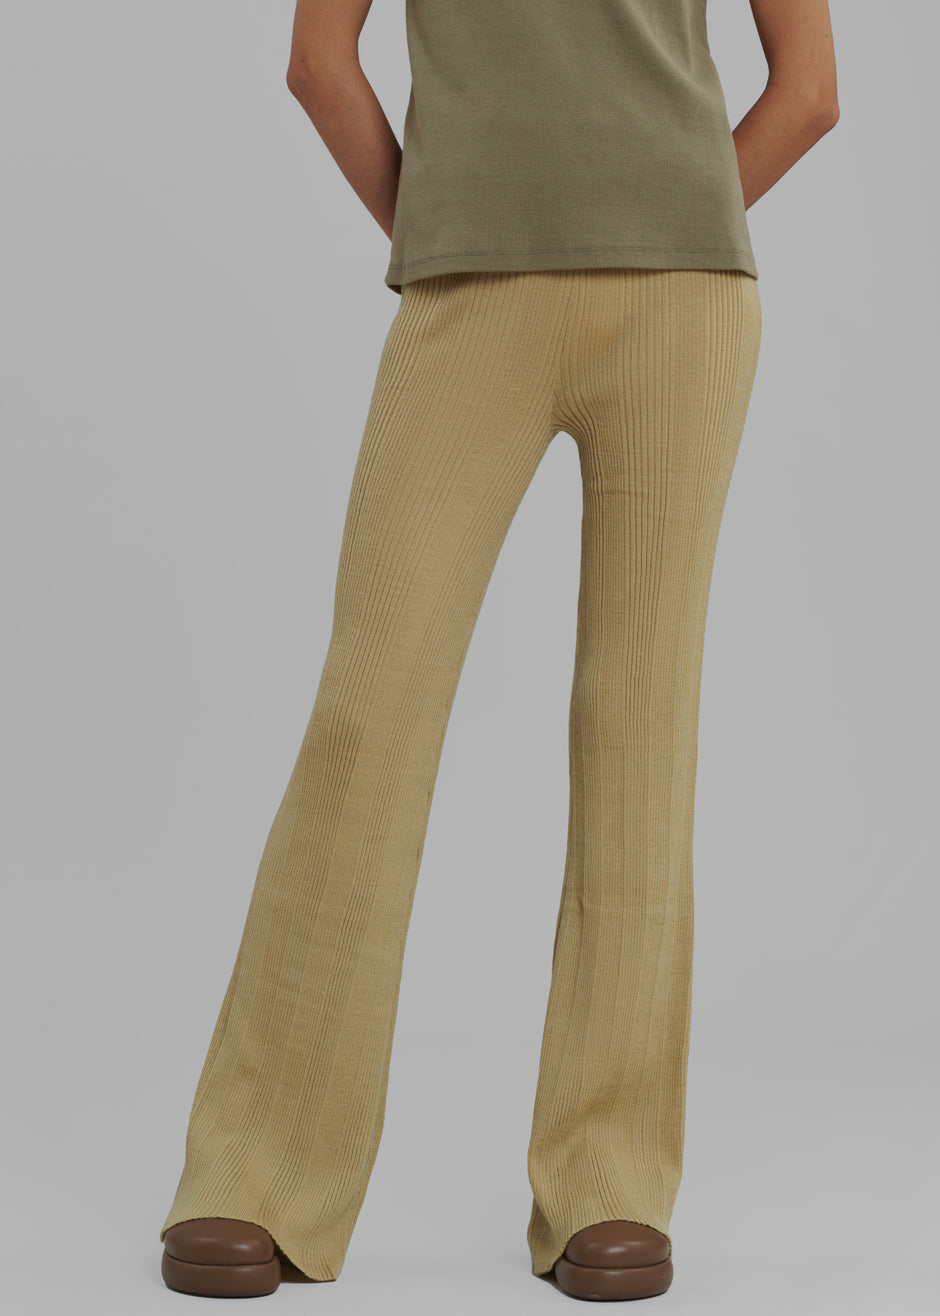 REMAIN Soleima Pants Refined Merino Wool - Sage Green - 8